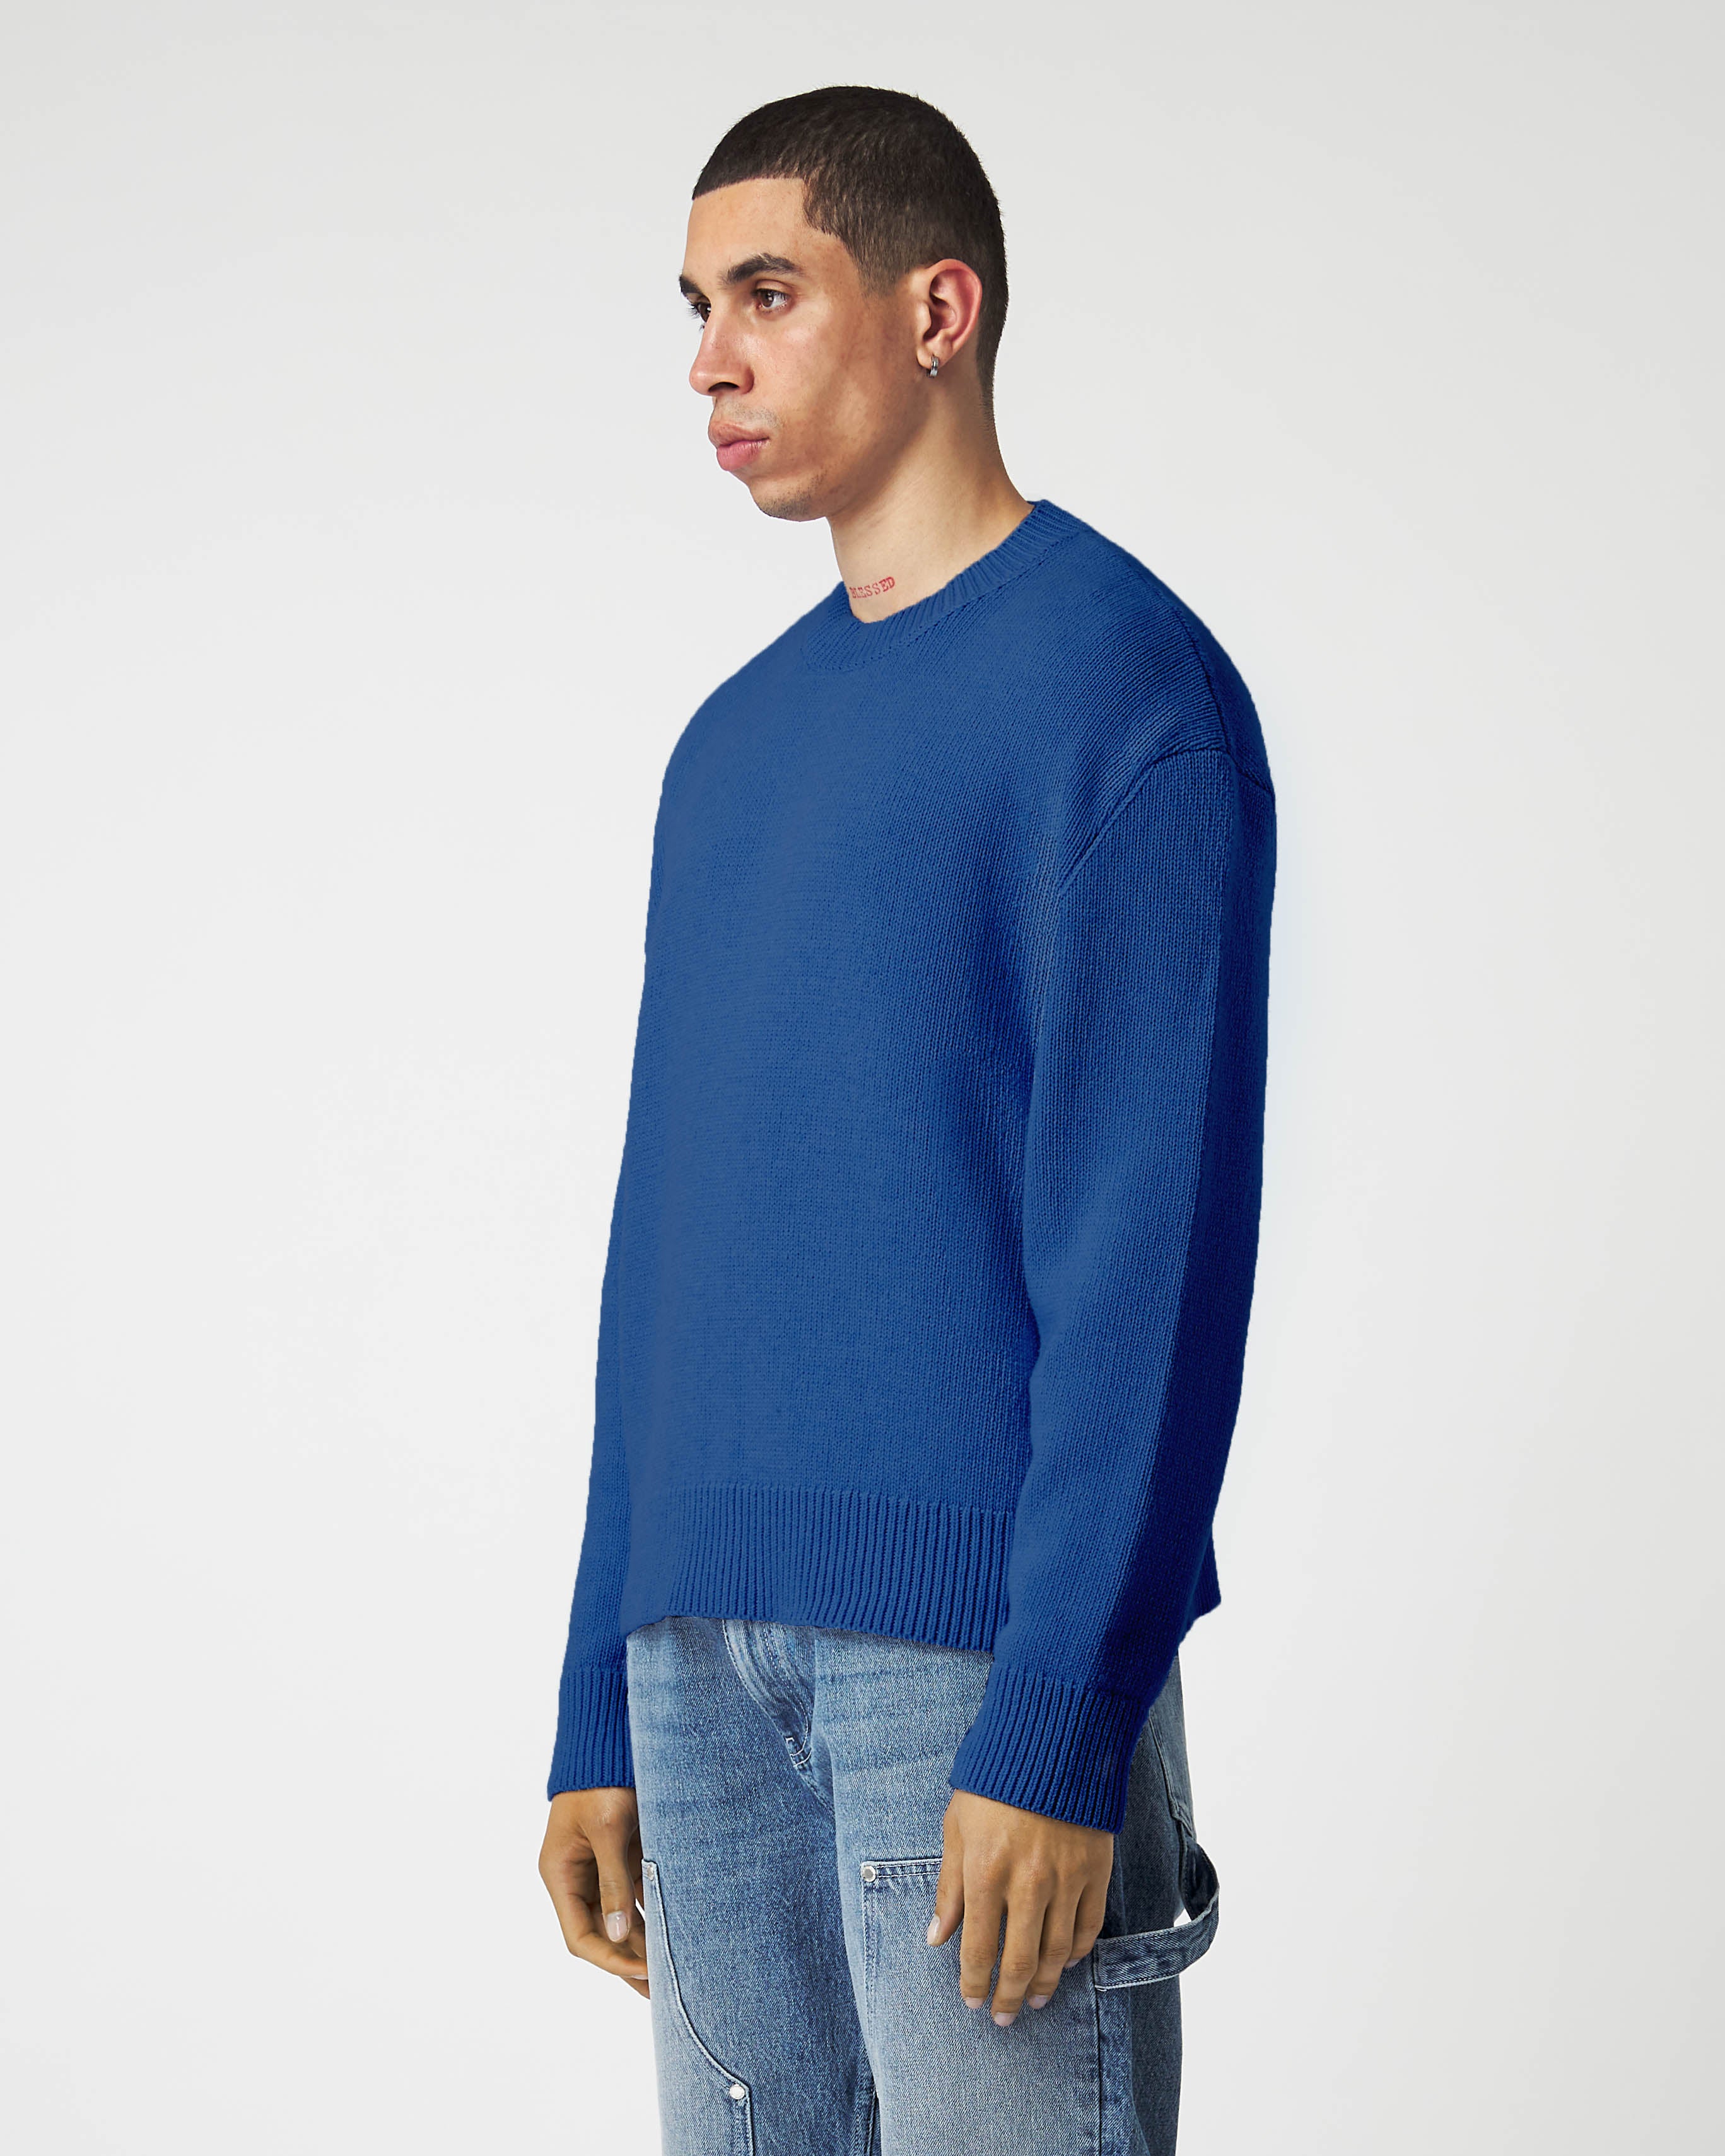 Royal Blue Knit Sweater